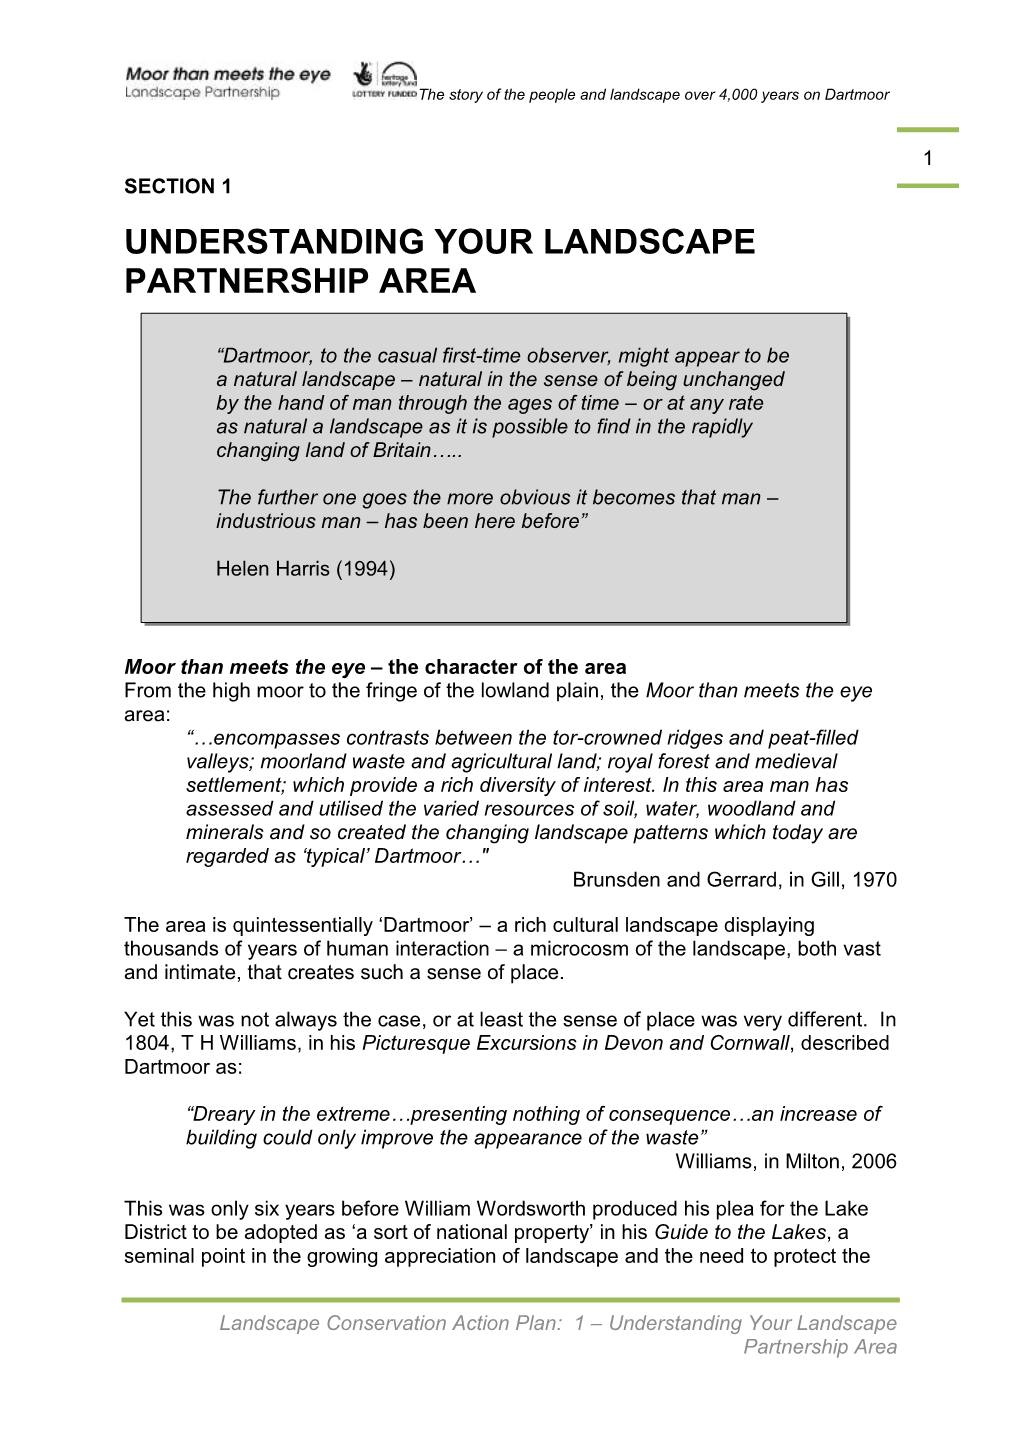 Understanding Your Landscape Partnership Area